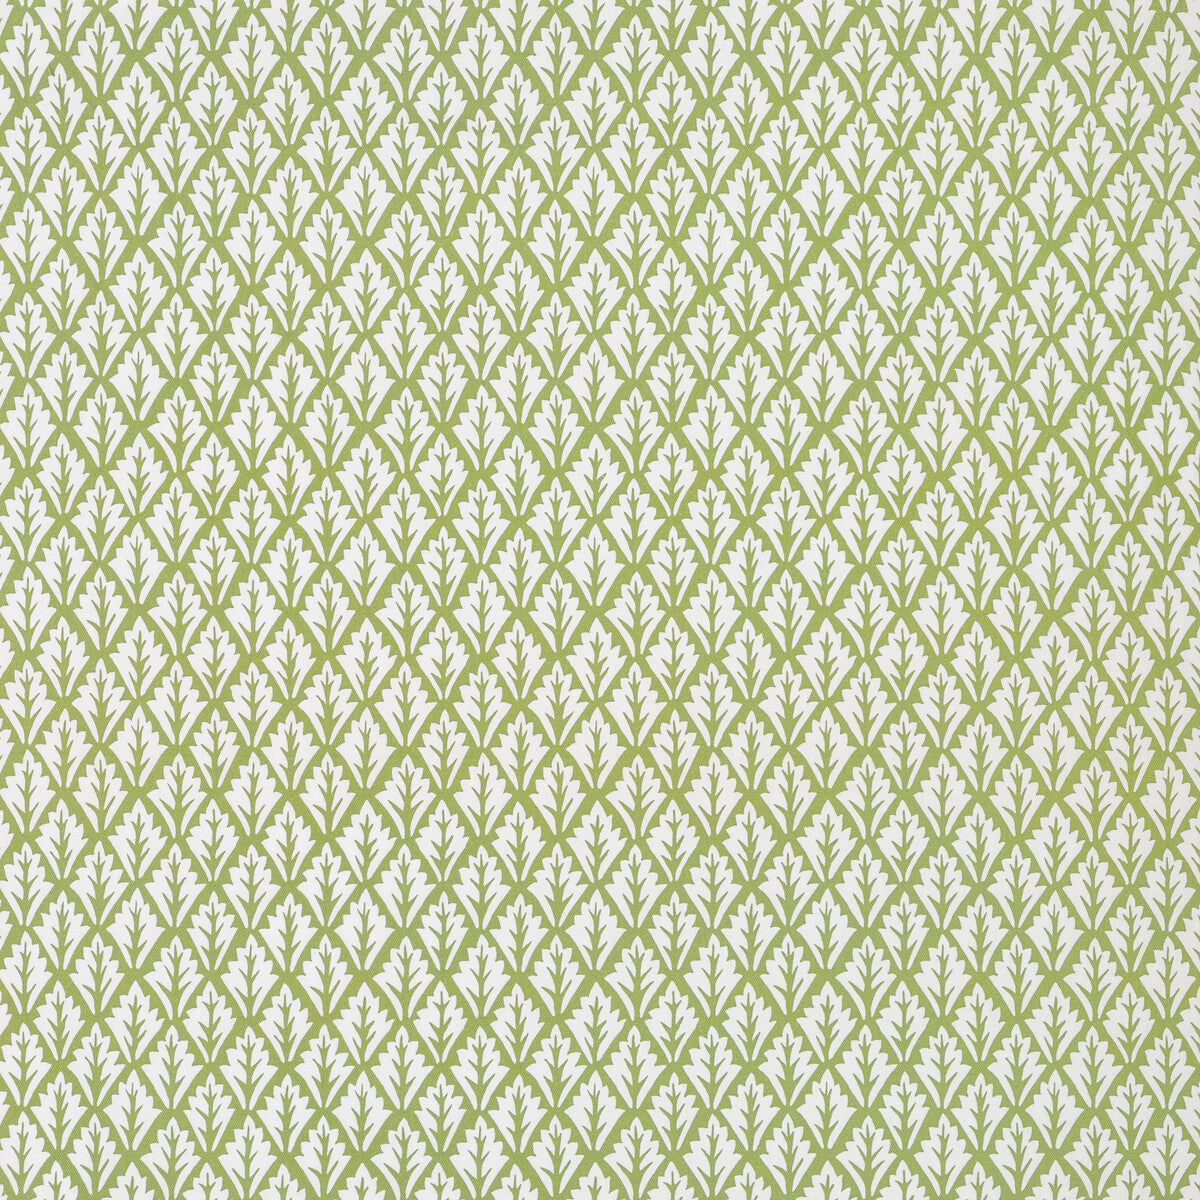 Dorso fabric in olive color - pattern DORSO.23.0 - by Kravet Basics